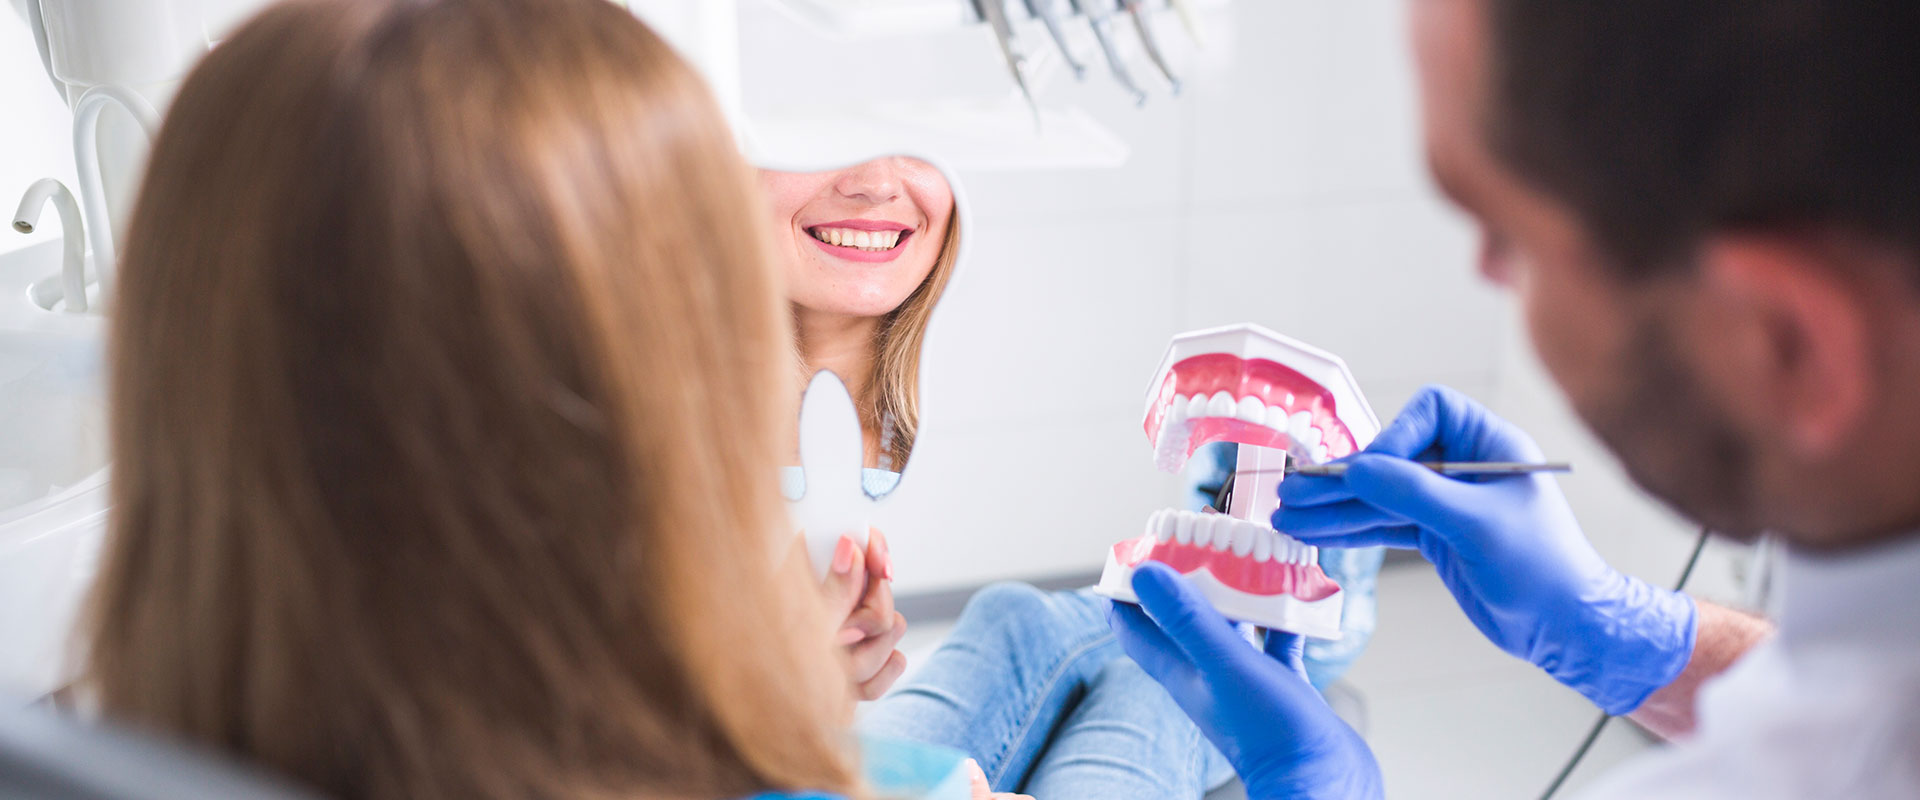 A Dentist Explaining the dental procedure to patient